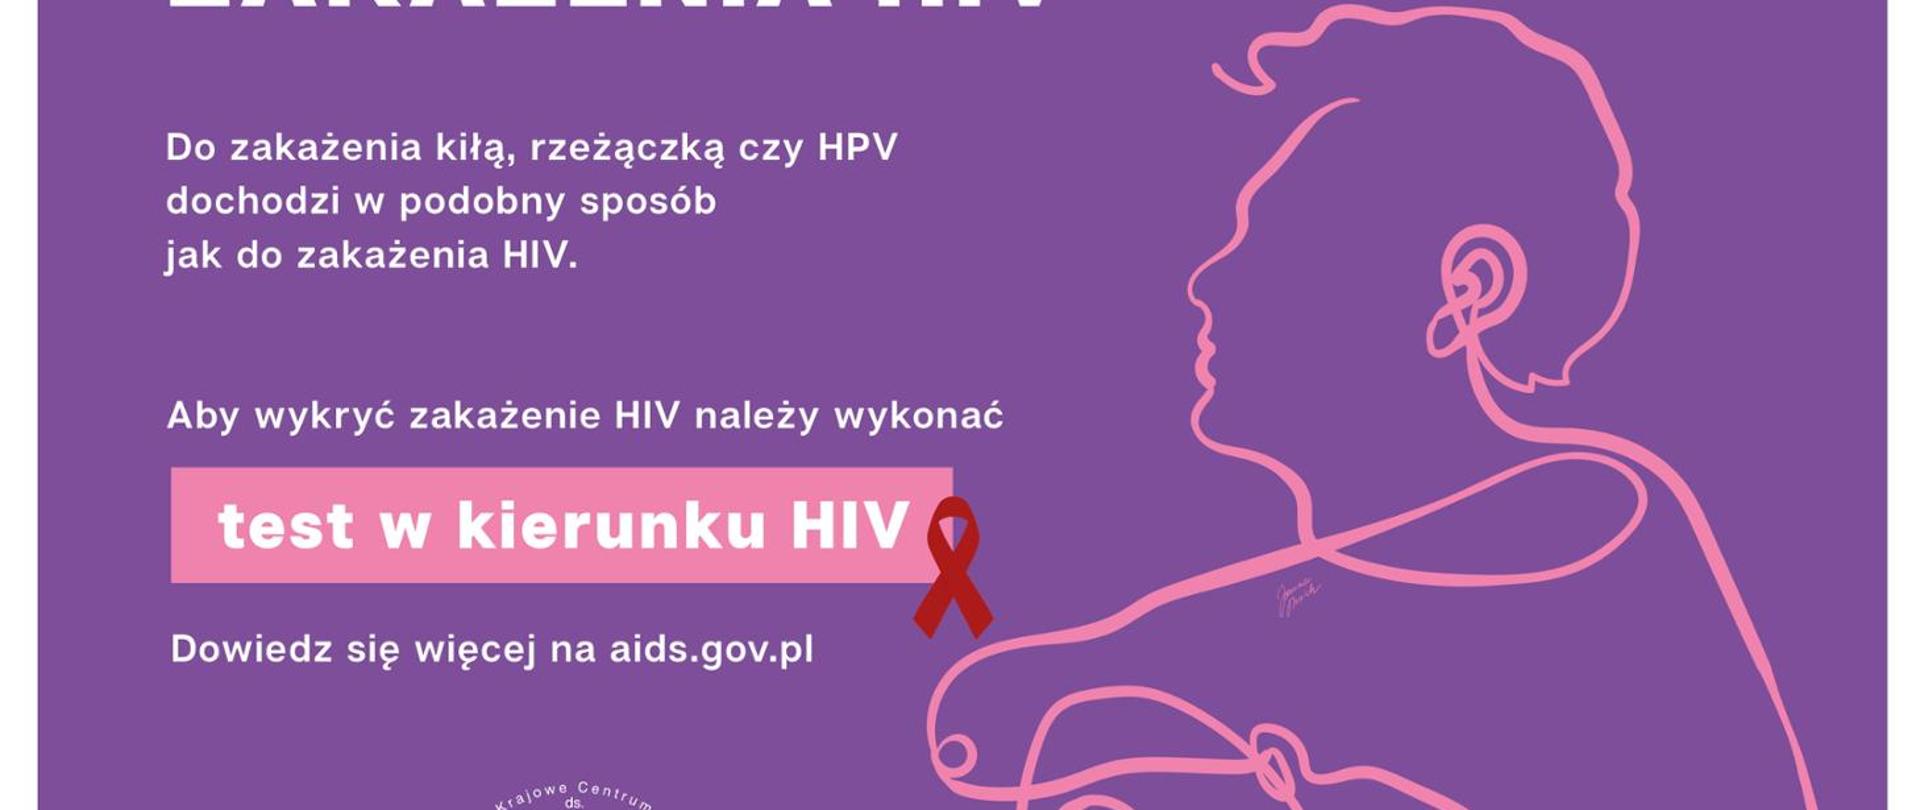 Kampania profilaktyczna HIVAIDS